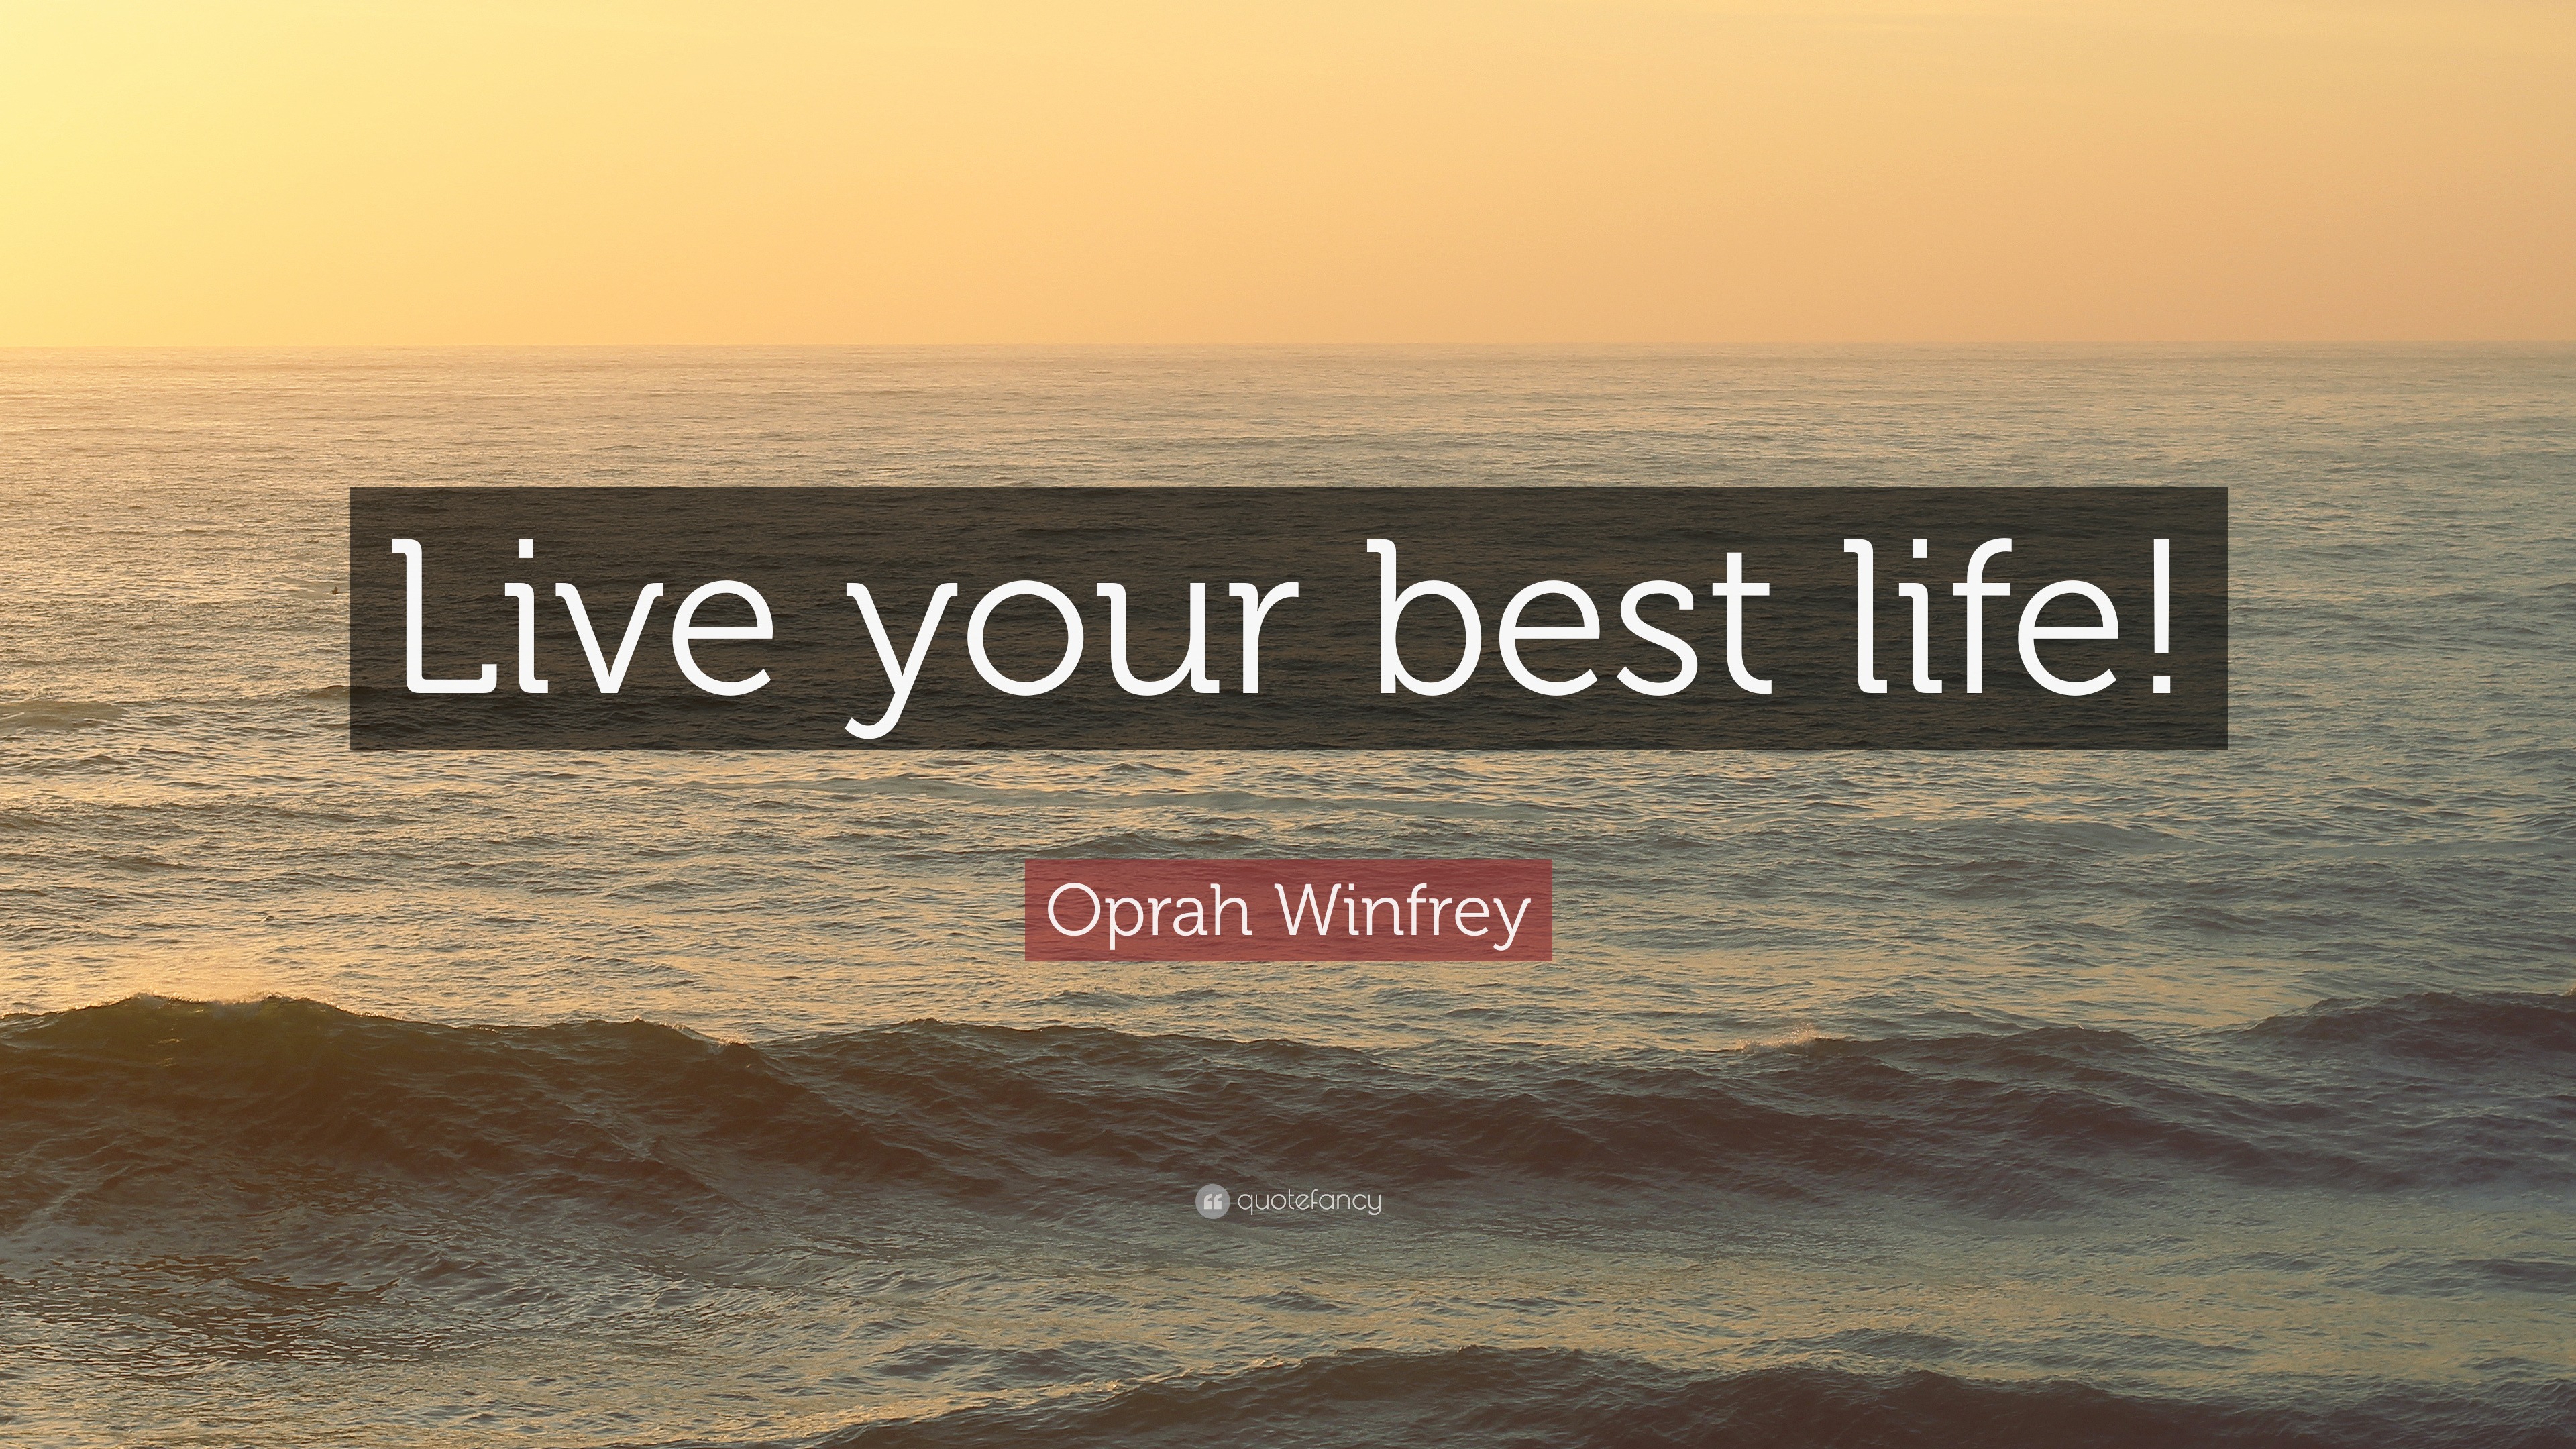 Oprah Winfrey Quote “Live your best life!”